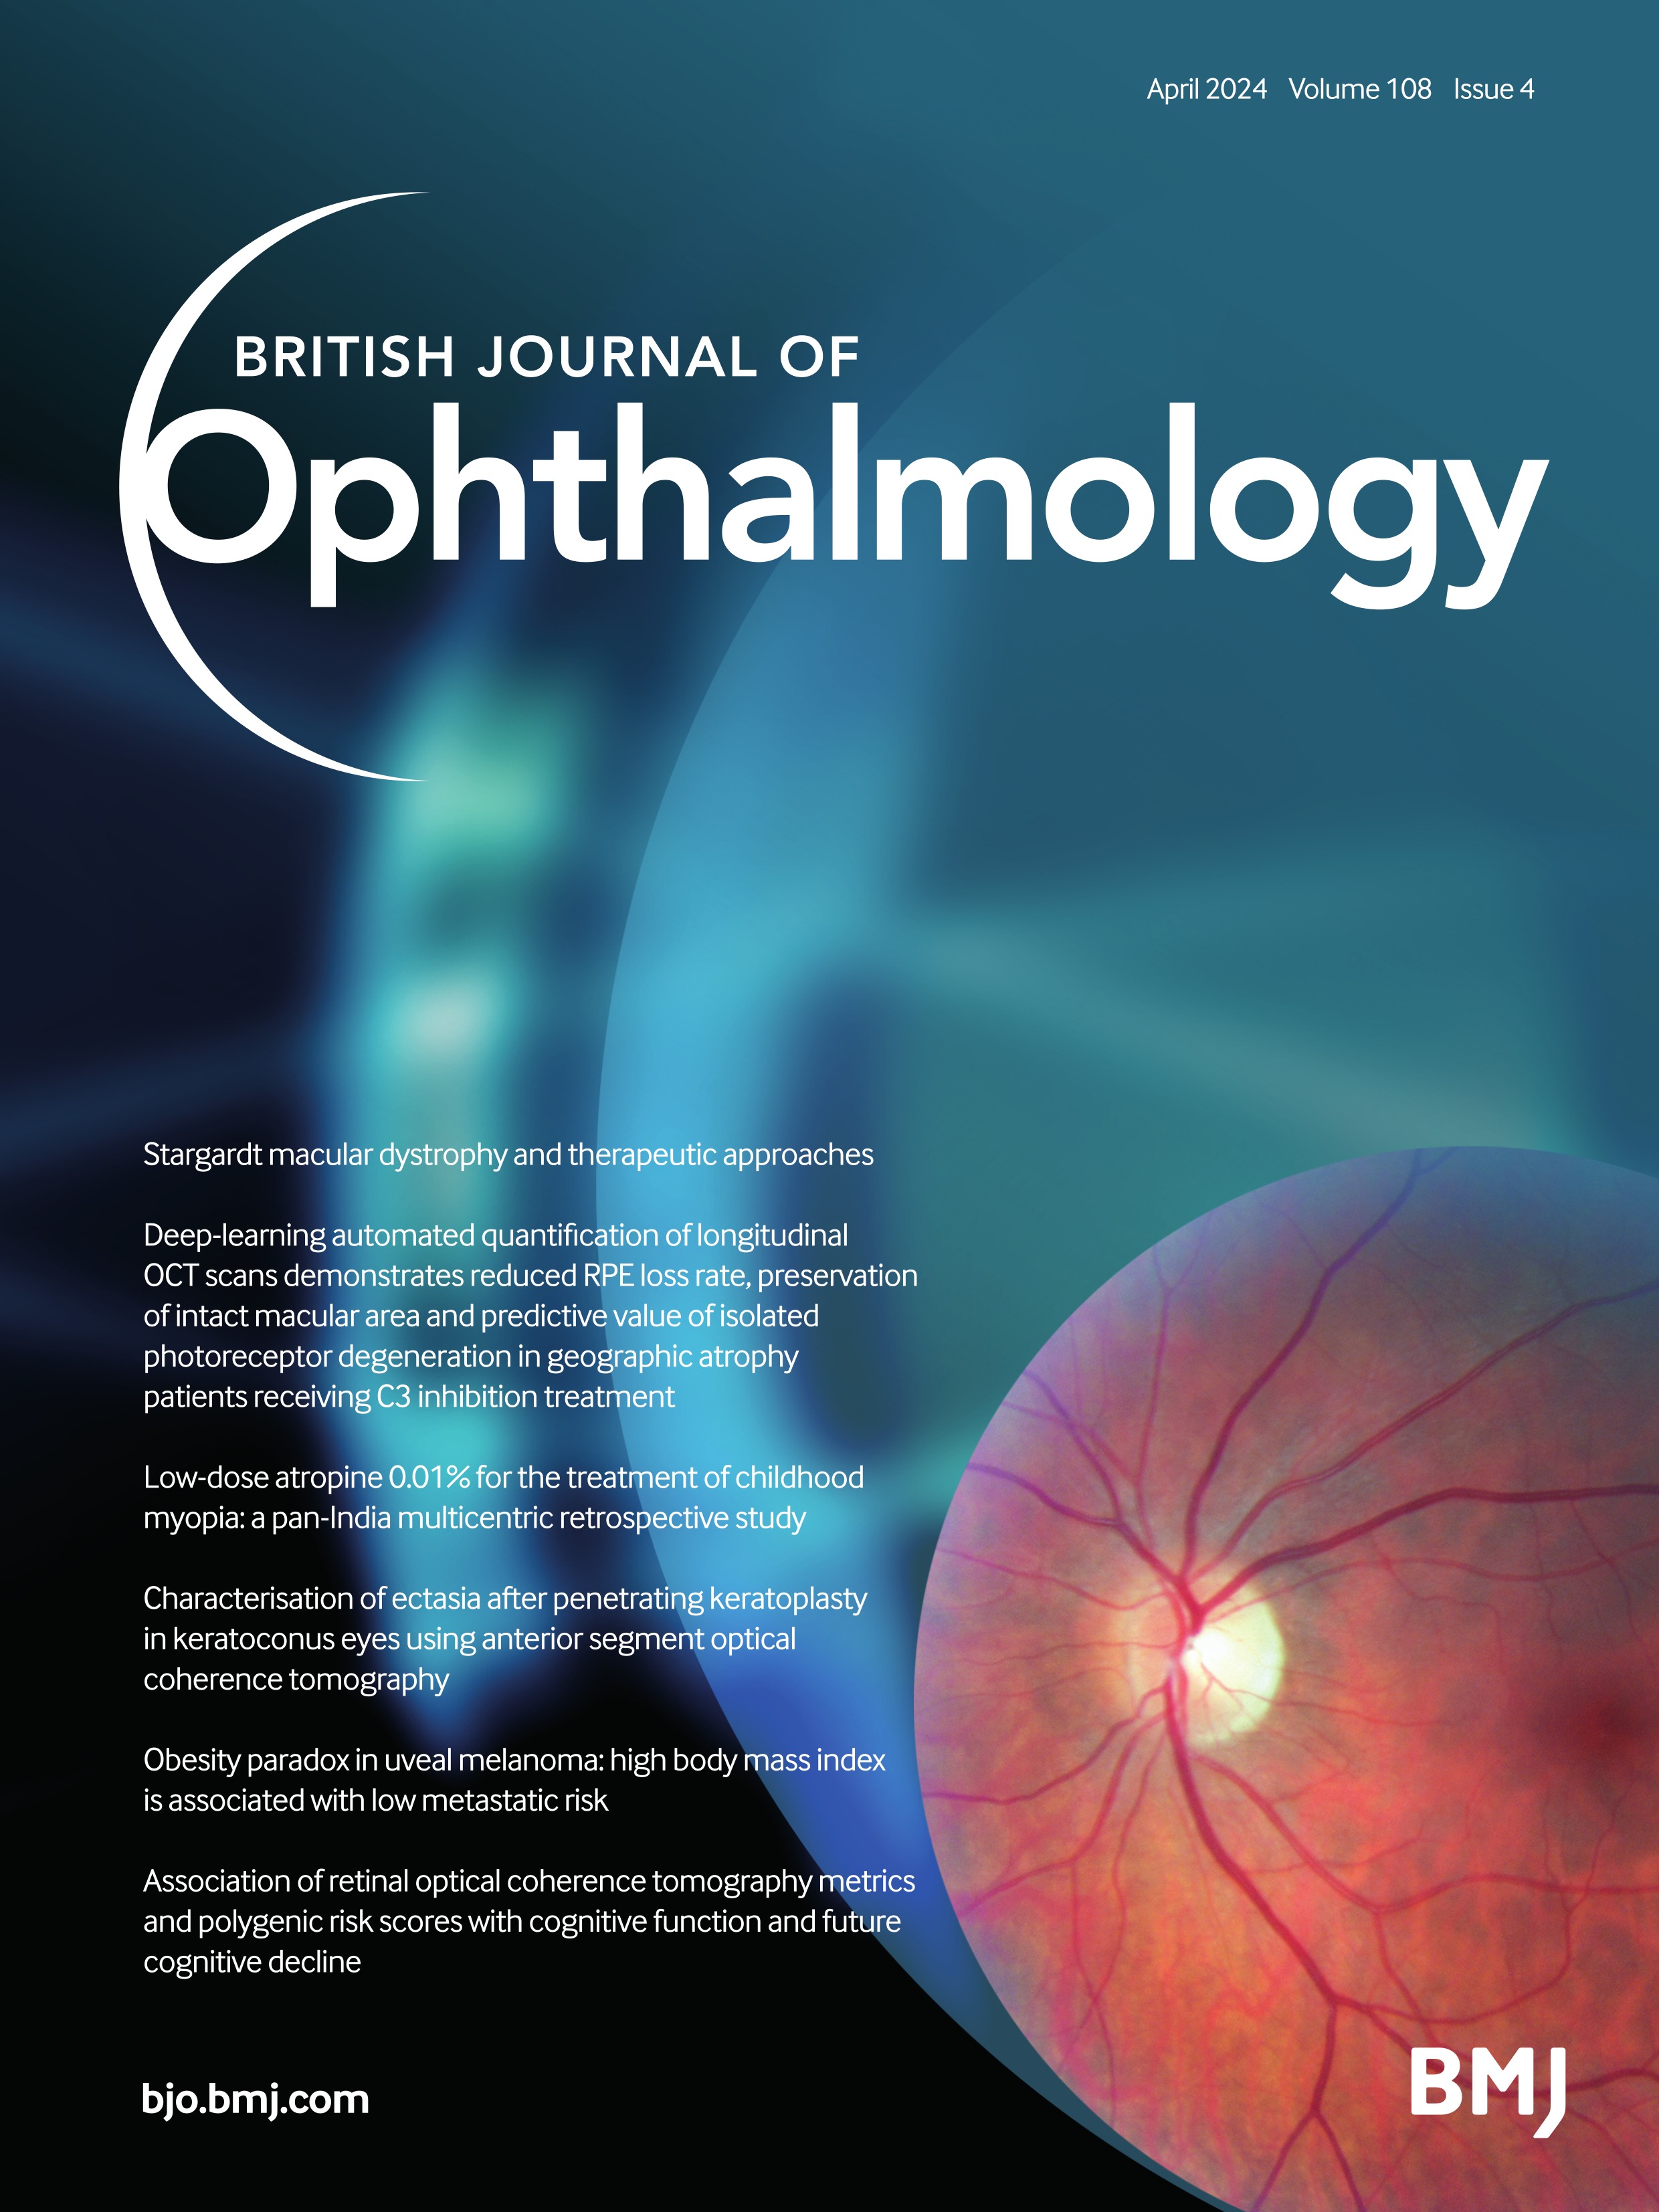 Characterisation of ectasia after penetrating keratoplasty in keratoconus eyes using anterior segment optical coherence tomography